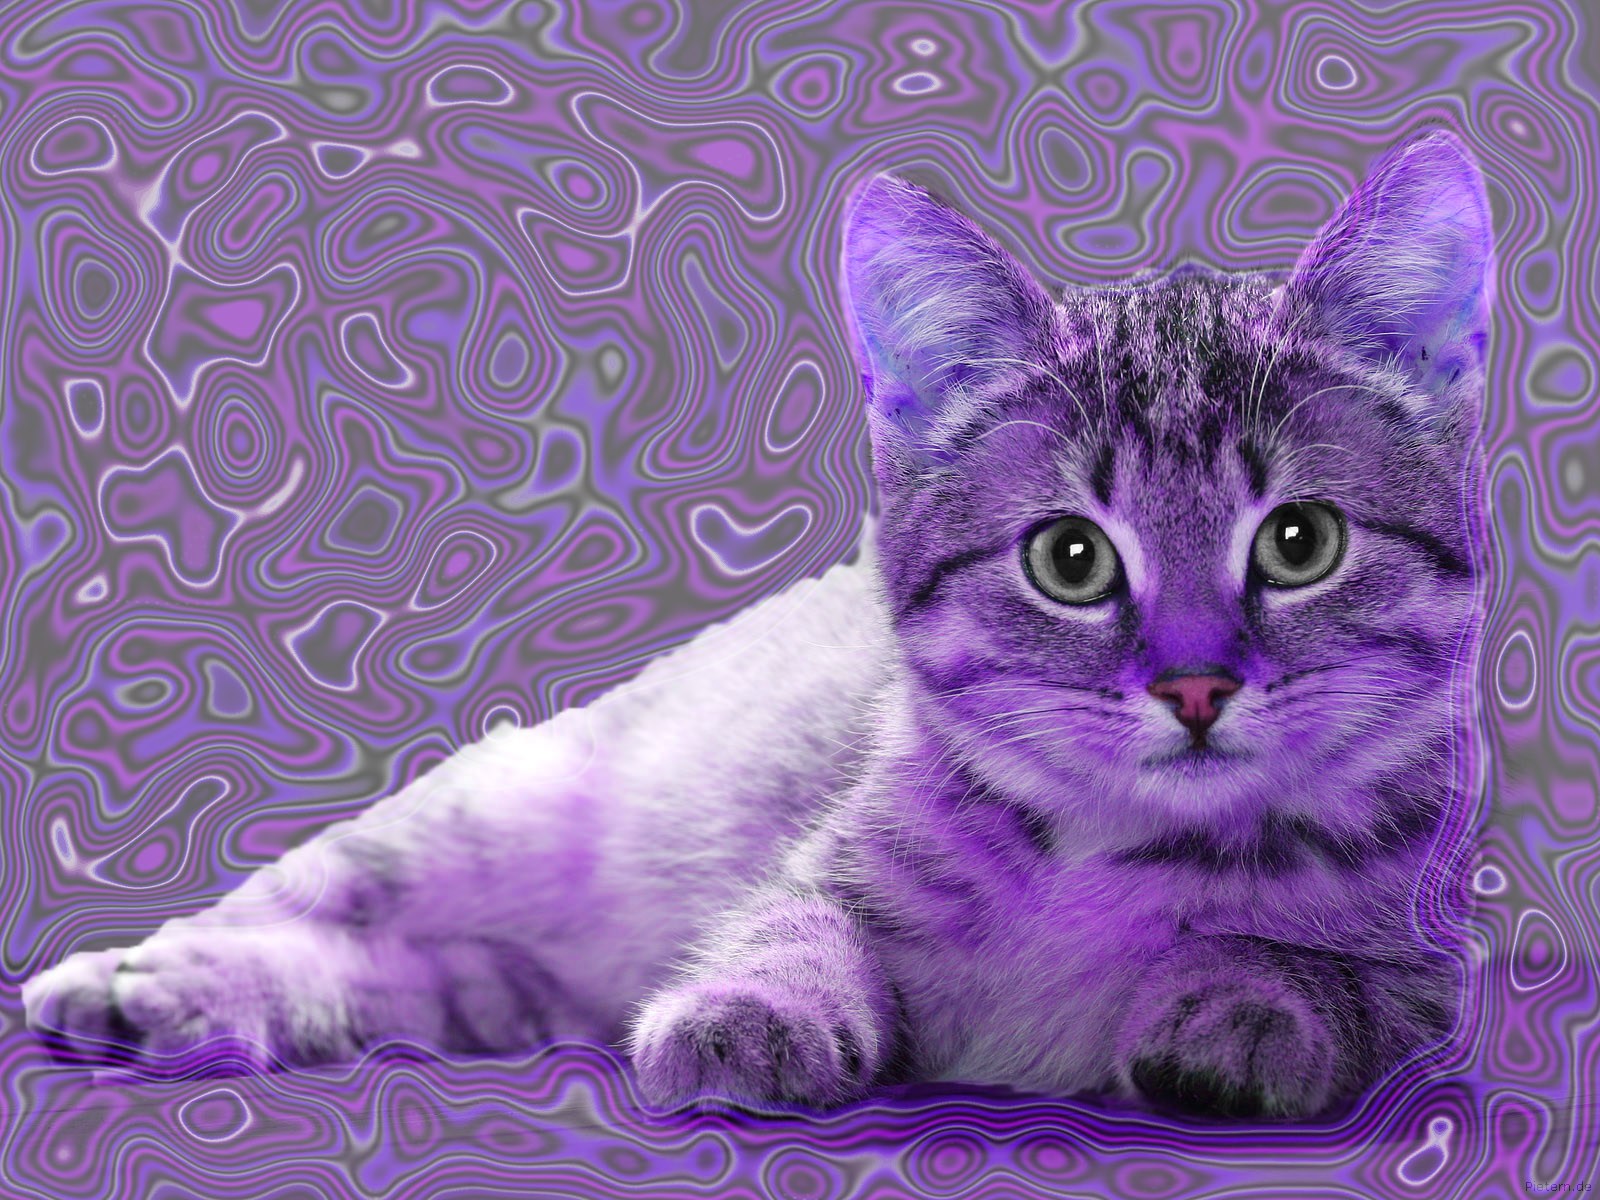 Котов фиолетового цвета - картинки и фото koshka.top